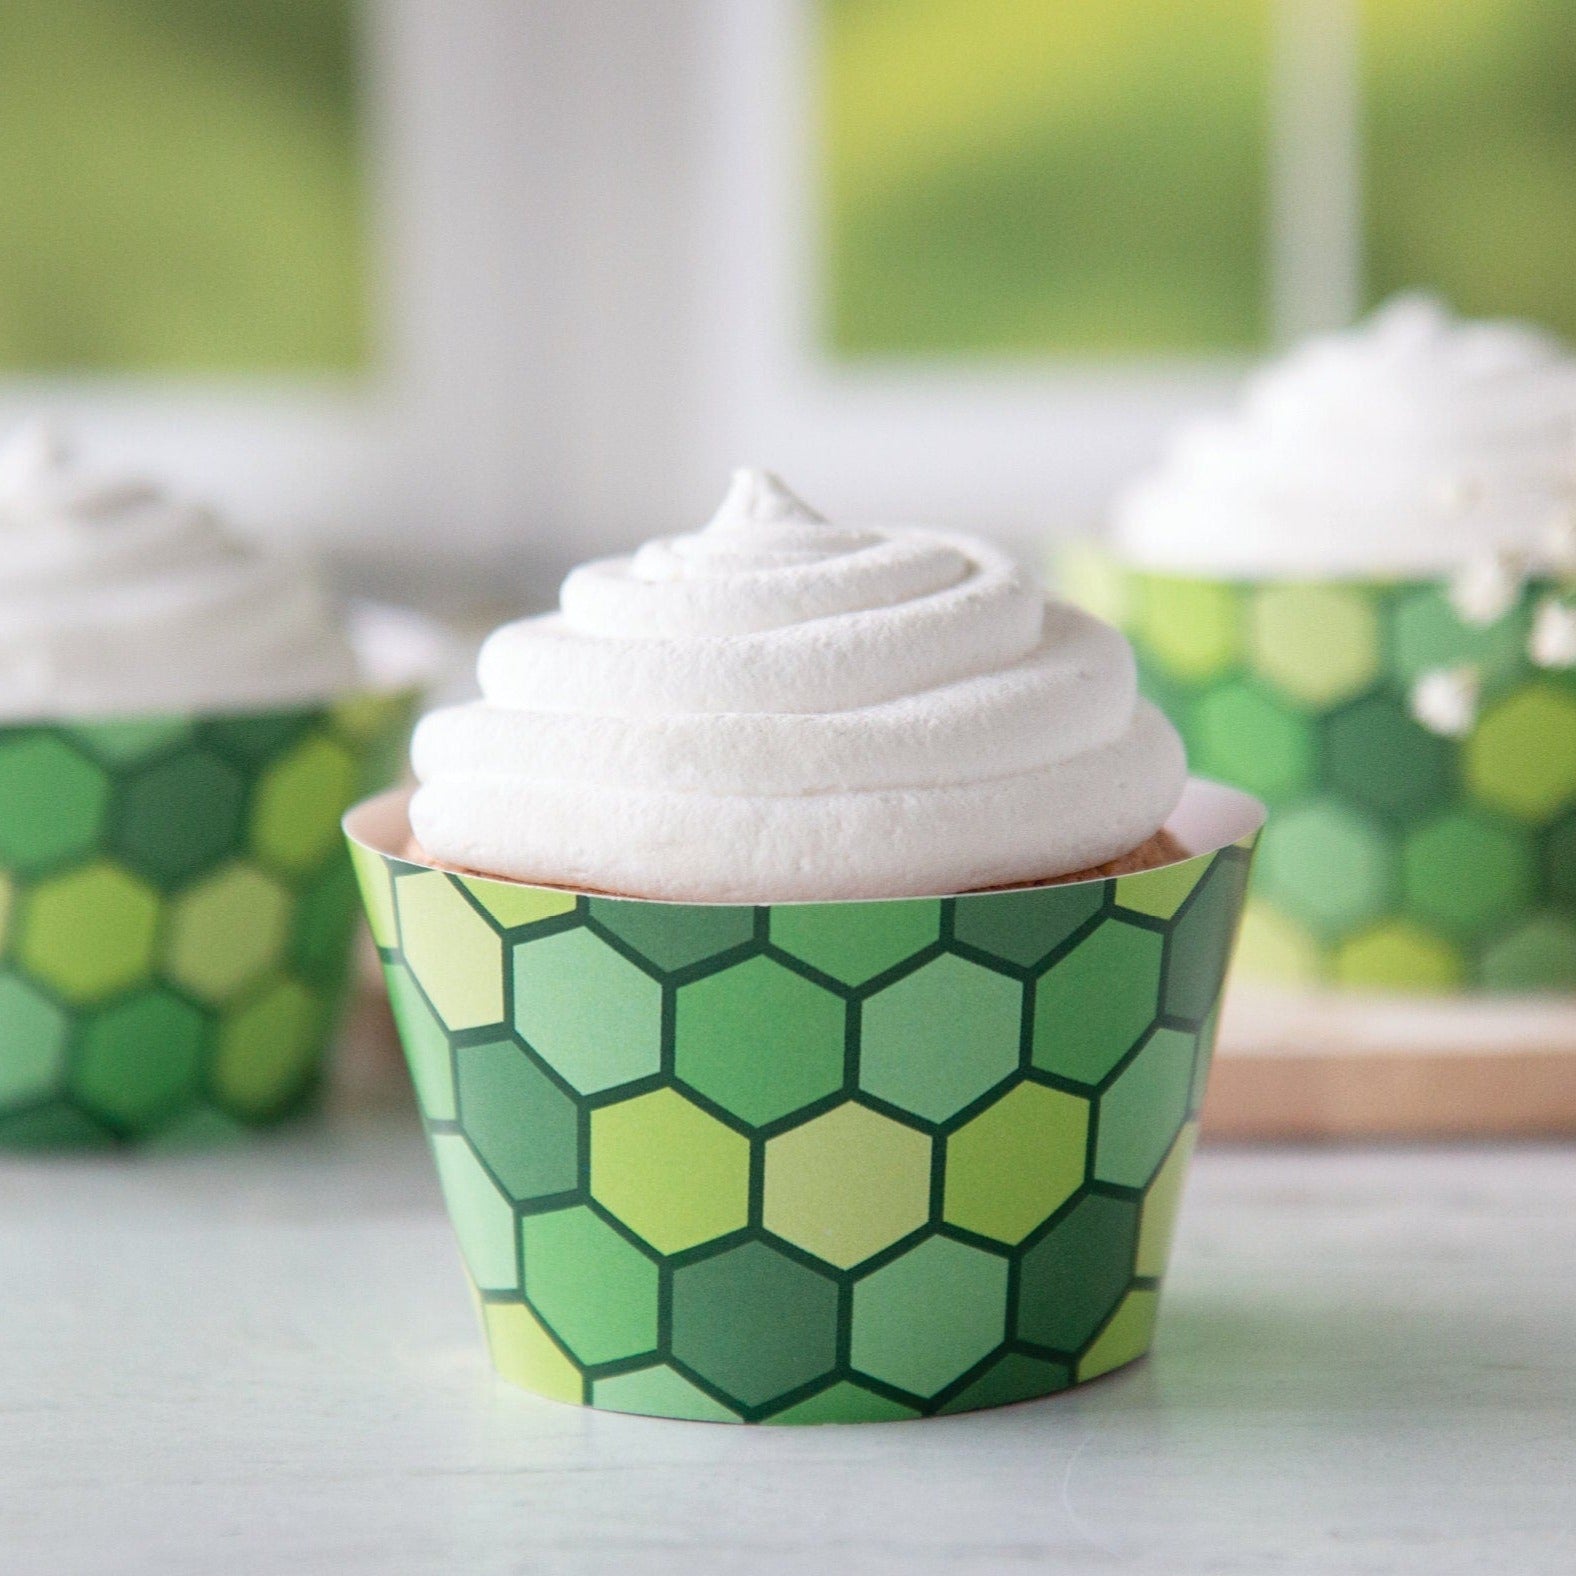 Green Hexagon Cupcake Wrapper - PRINTABLE instant download PDF. Cupcake sleeve liner, varied geometric shapes, St. Patrick's dessert idea.